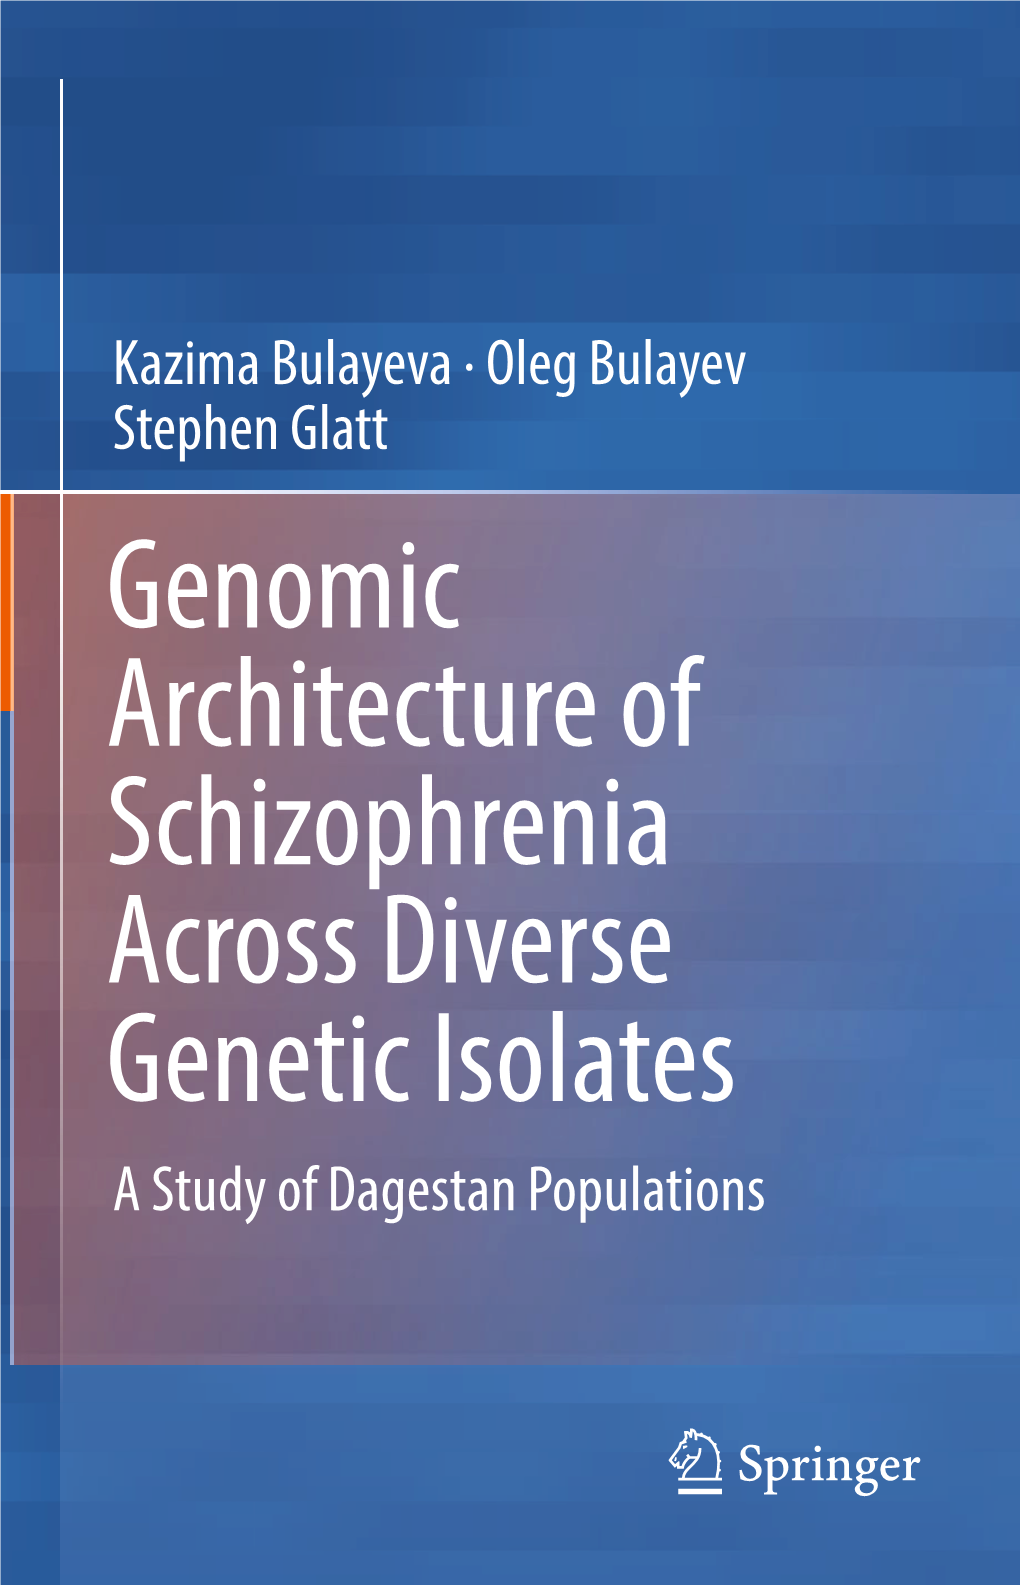 Genomic Architecture of Schizophrenia Across Diverse